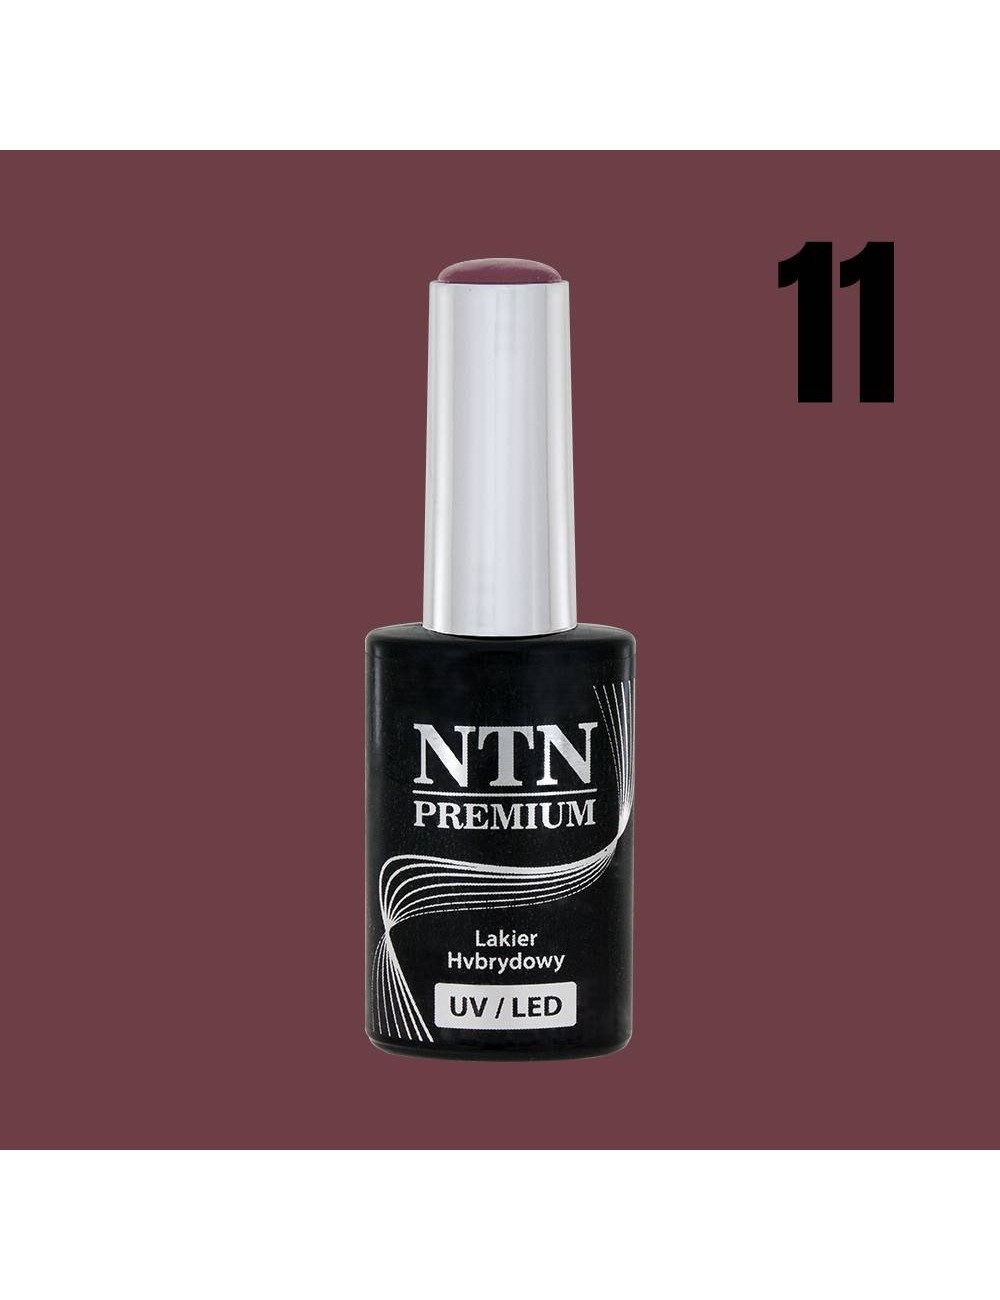 NTN premium 11